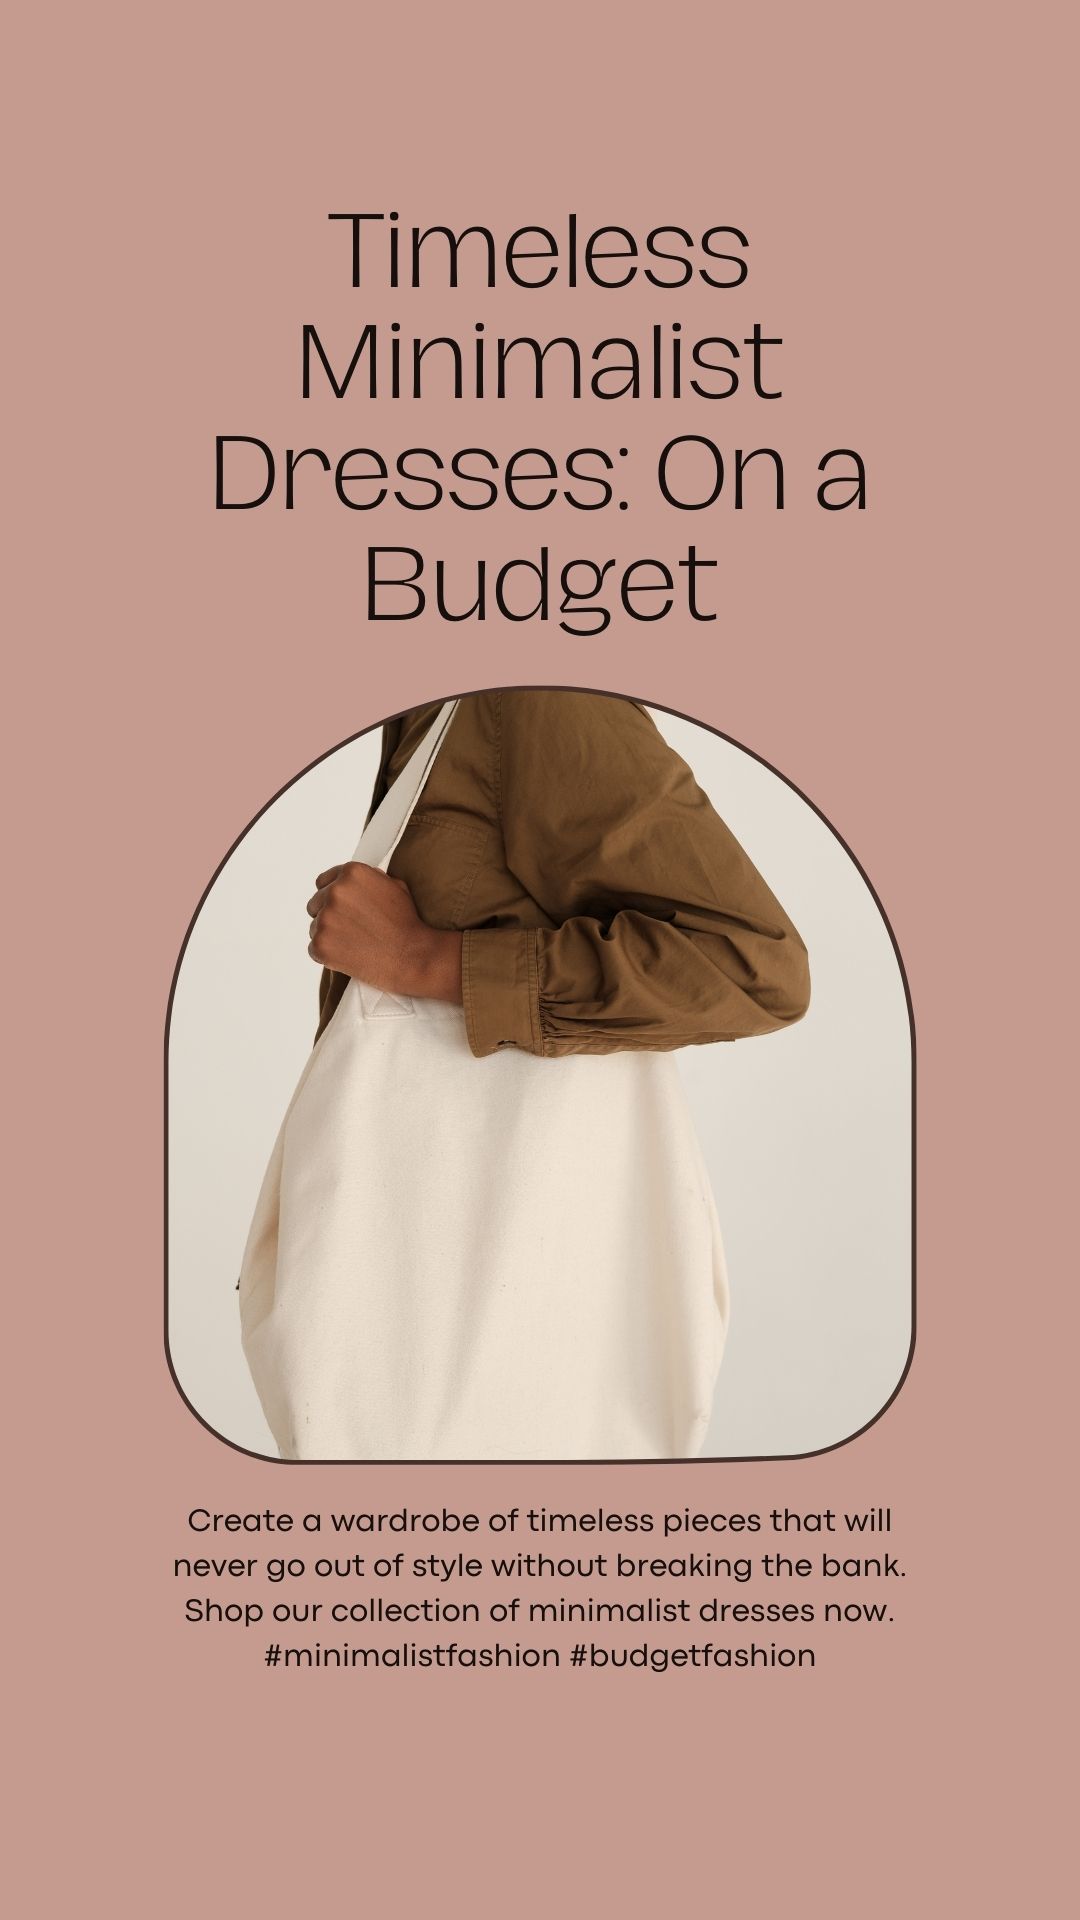 Minimalist Dresses: Build a Timeless Wardrobe on a Budget